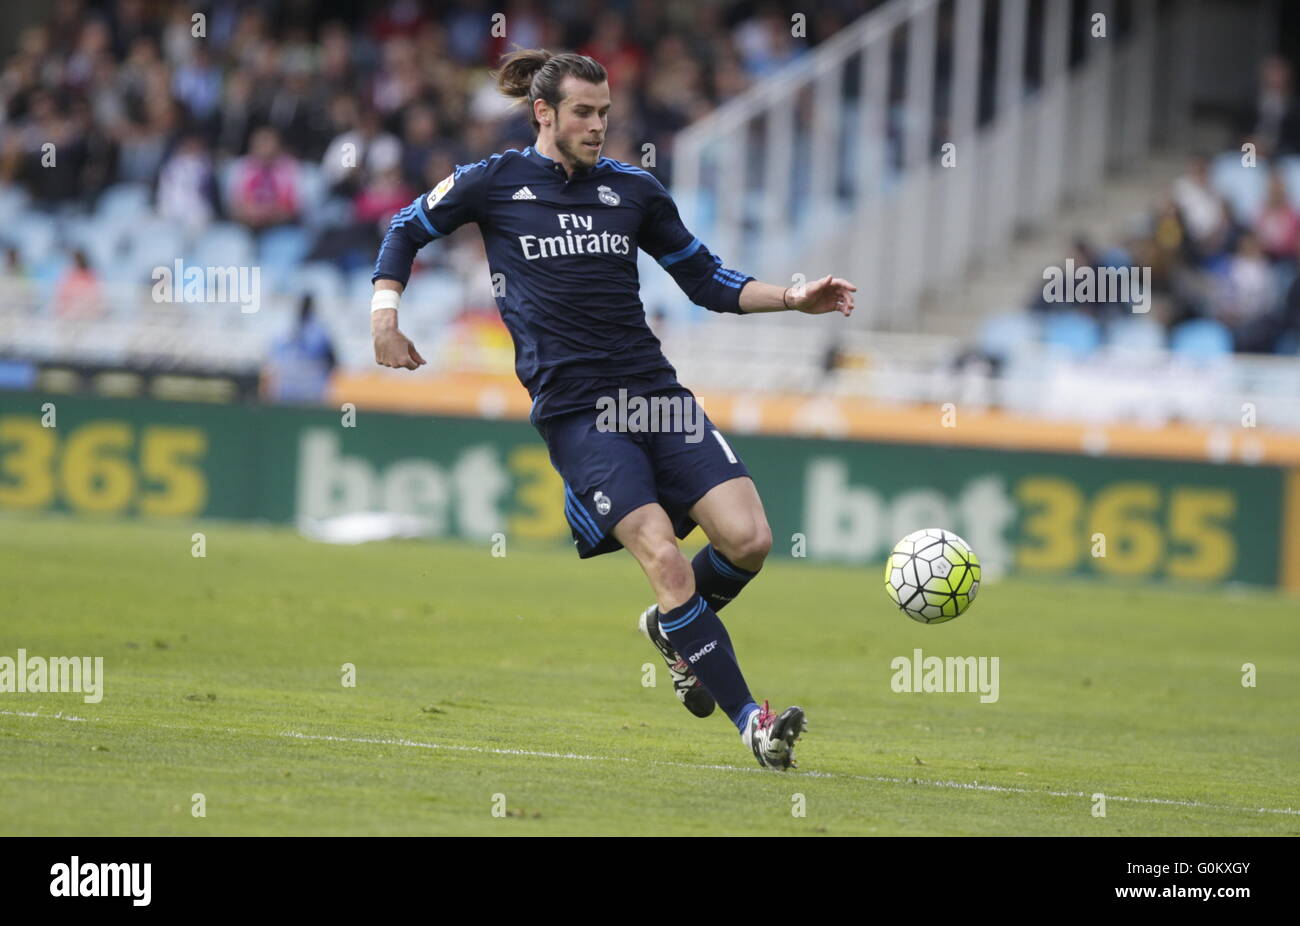 Gareth Bale of Real Madrid during the La Liga match espagolde Real Sociedad - Real Madrid at the Anoeta Stadium Stock Photo